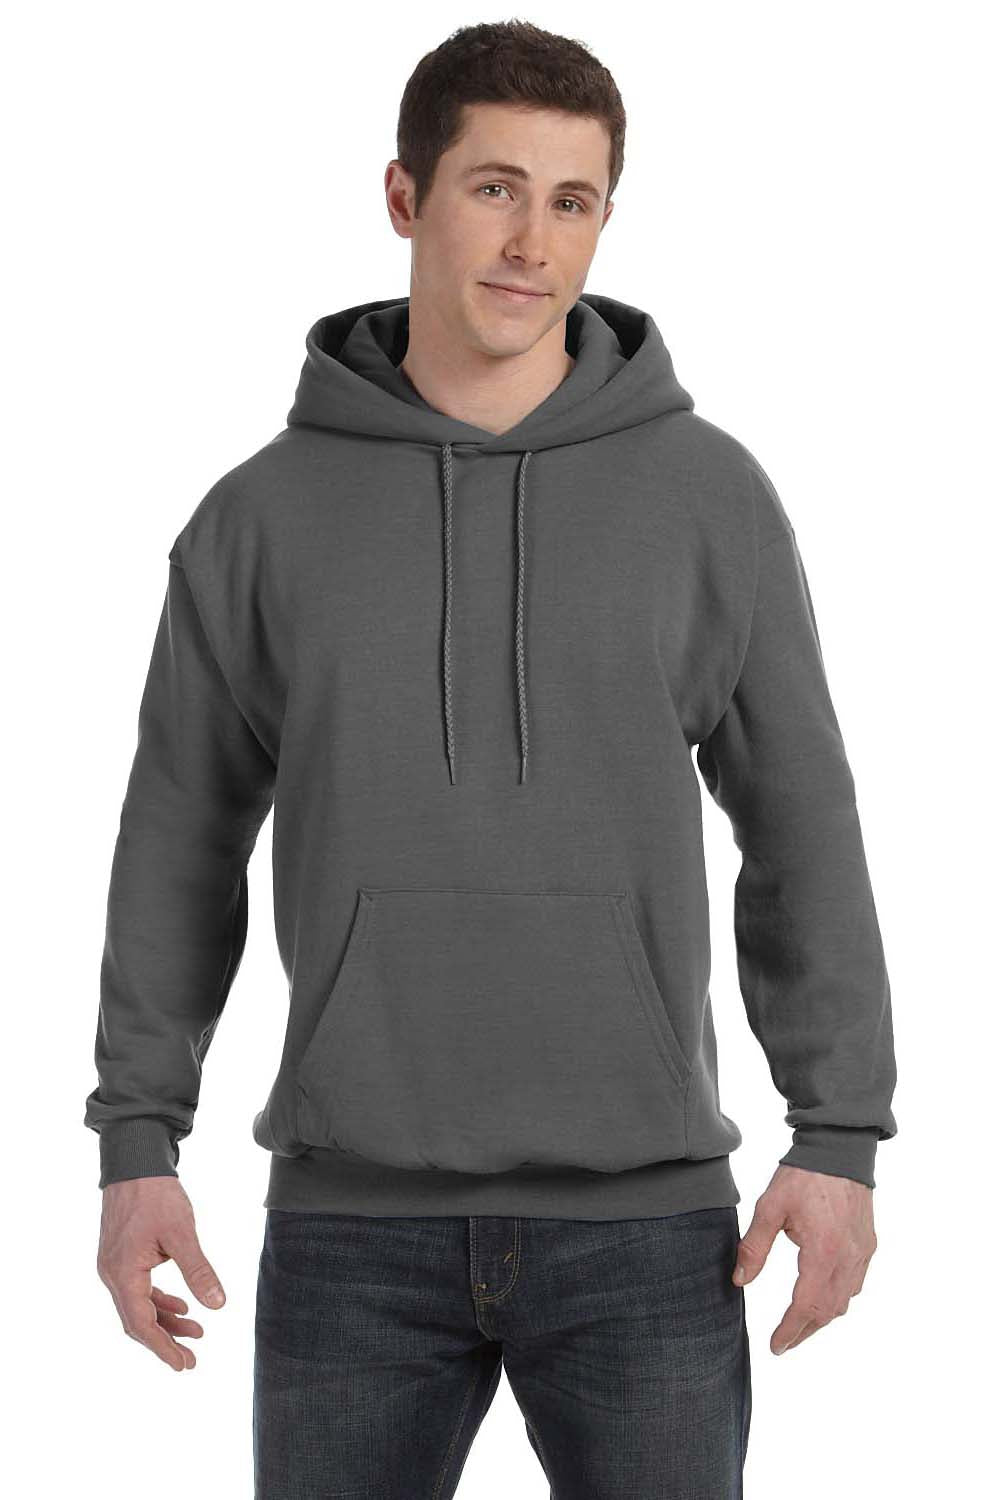 Hanes P170 Mens EcoSmart Print Pro XP Hooded Sweatshirt Hoodie Smoke Grey Front